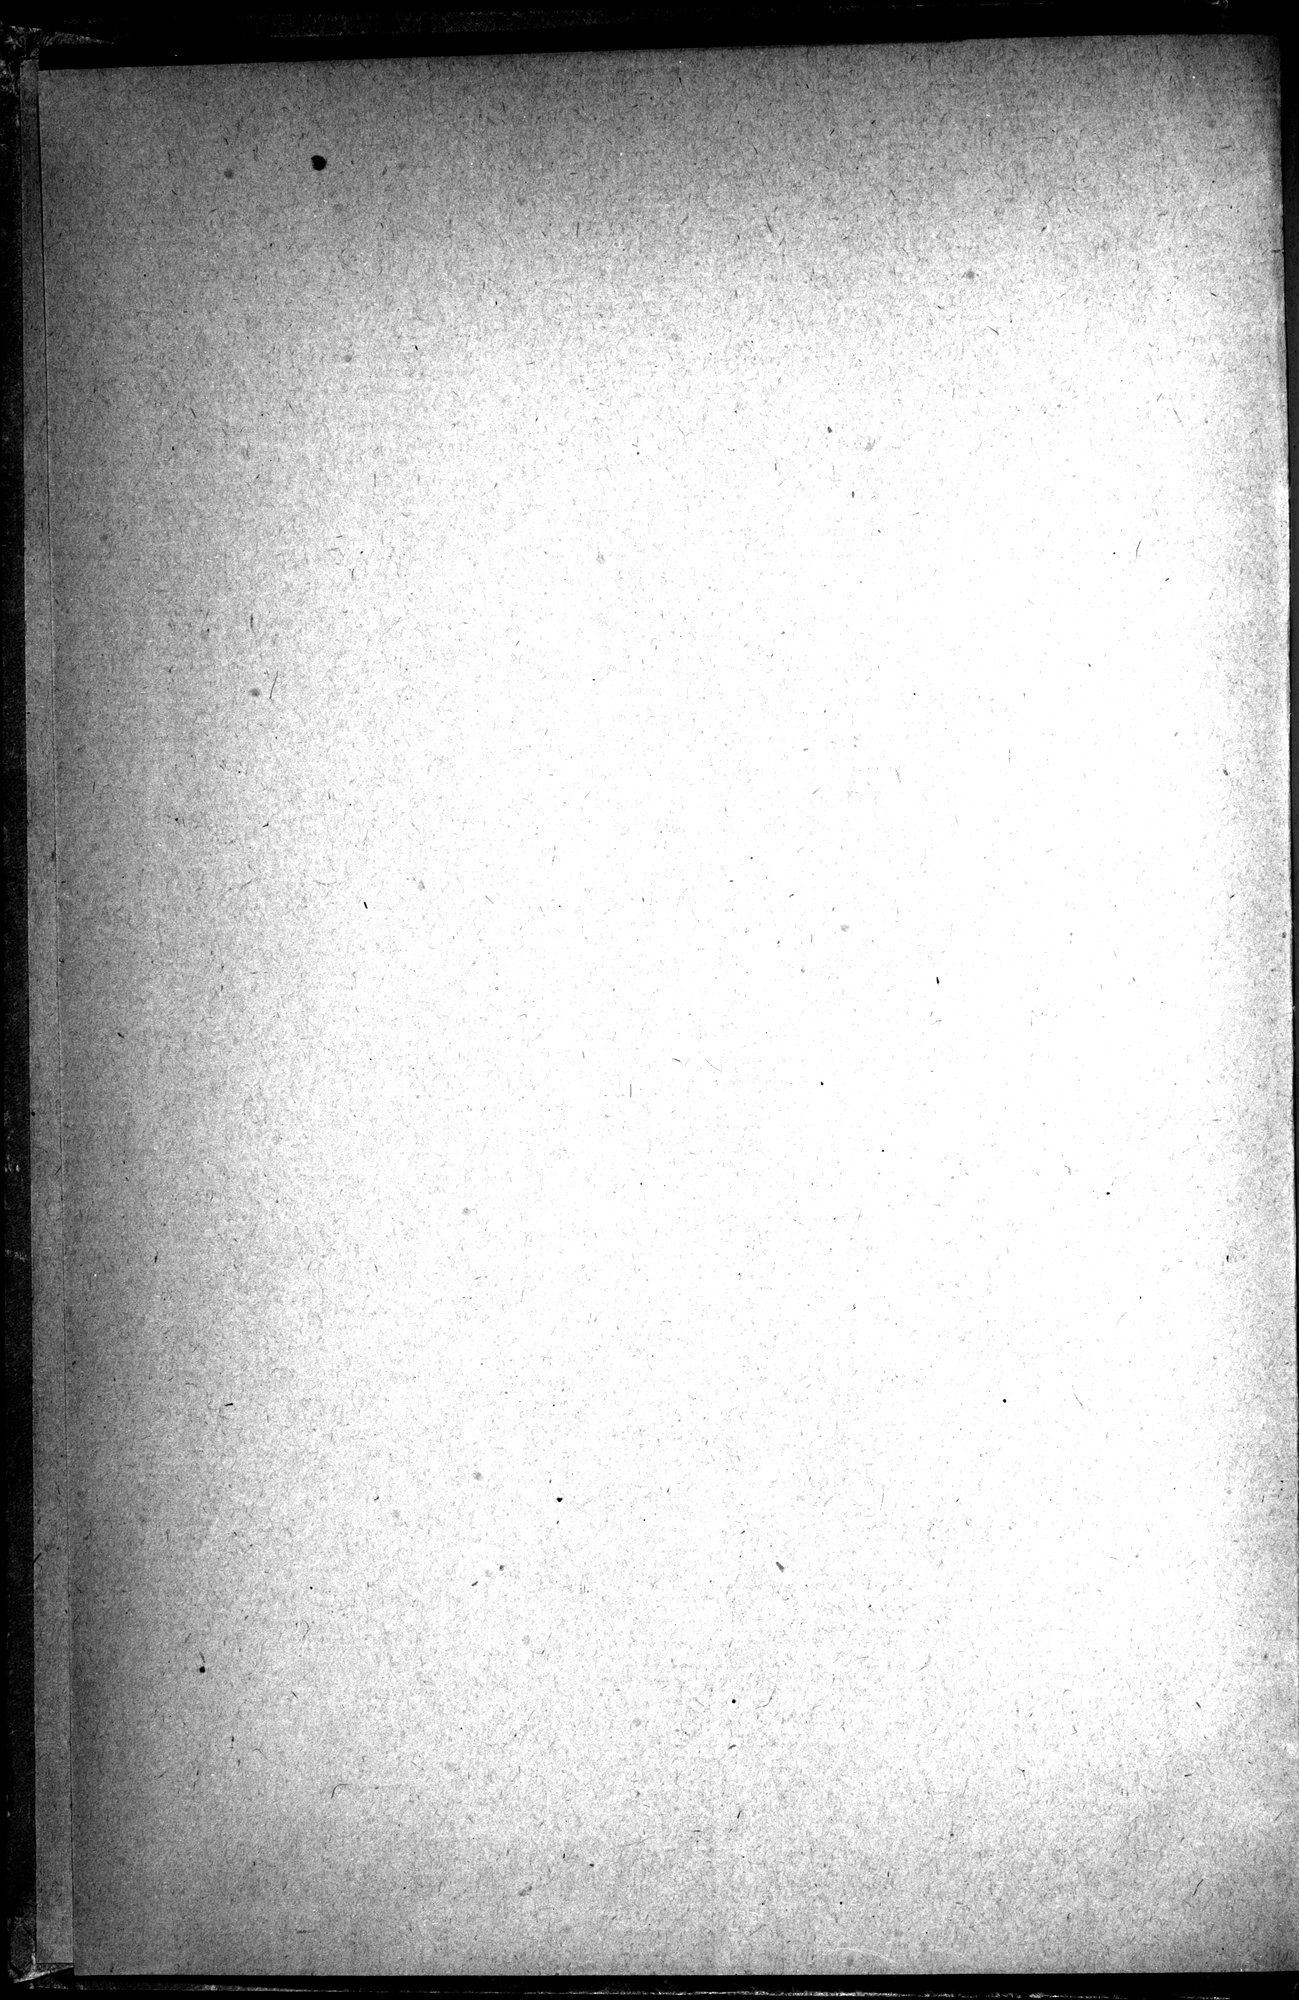 Puteshestvie v Tian' - Shan' v 1856-1857 godakh : vol.1 / Page 4 (Grayscale High Resolution Image)